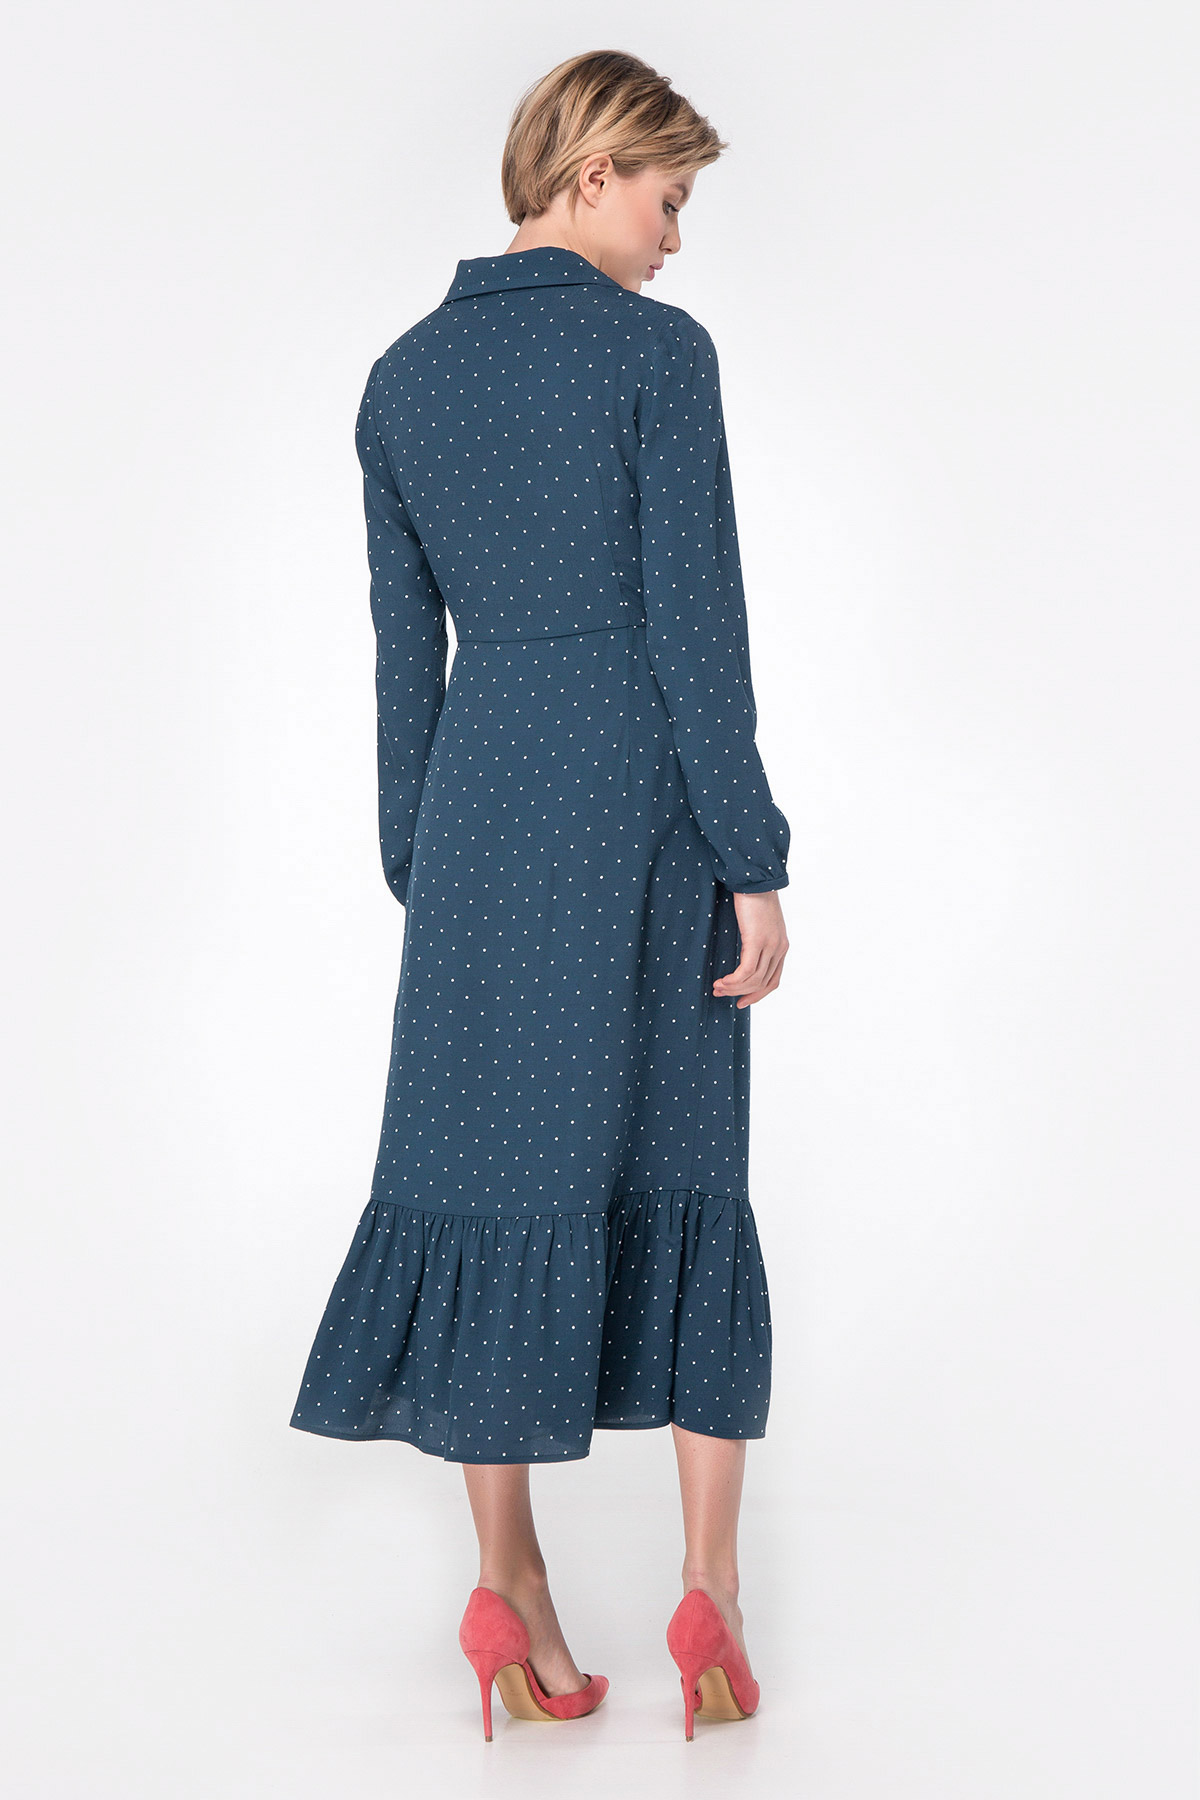 Dark-blue polka dot dress with pleats, photo 5